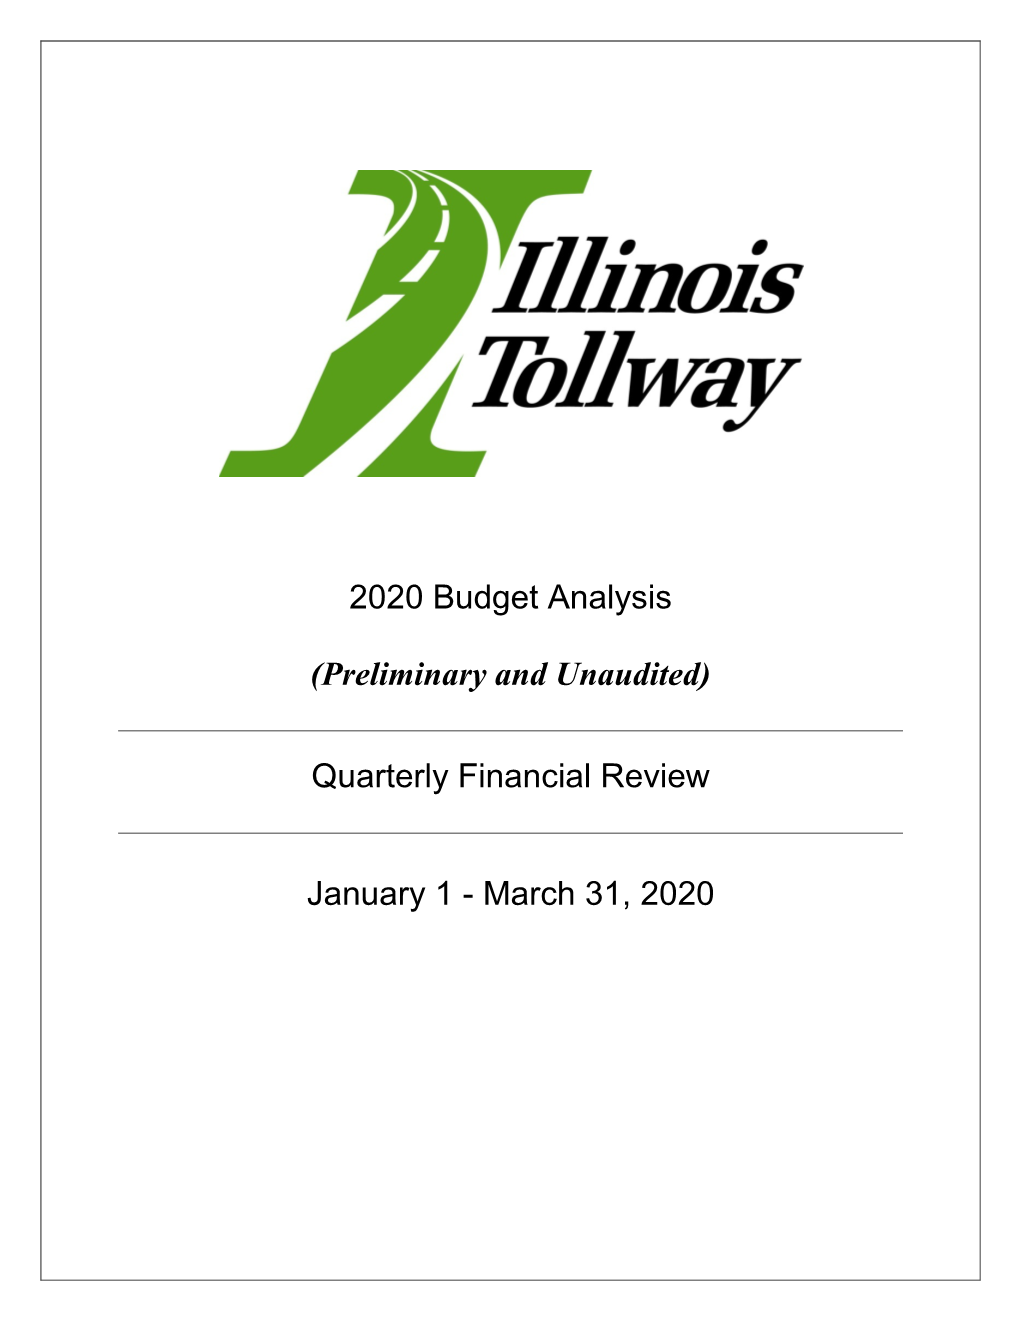 Quarterly Financial Review January 1